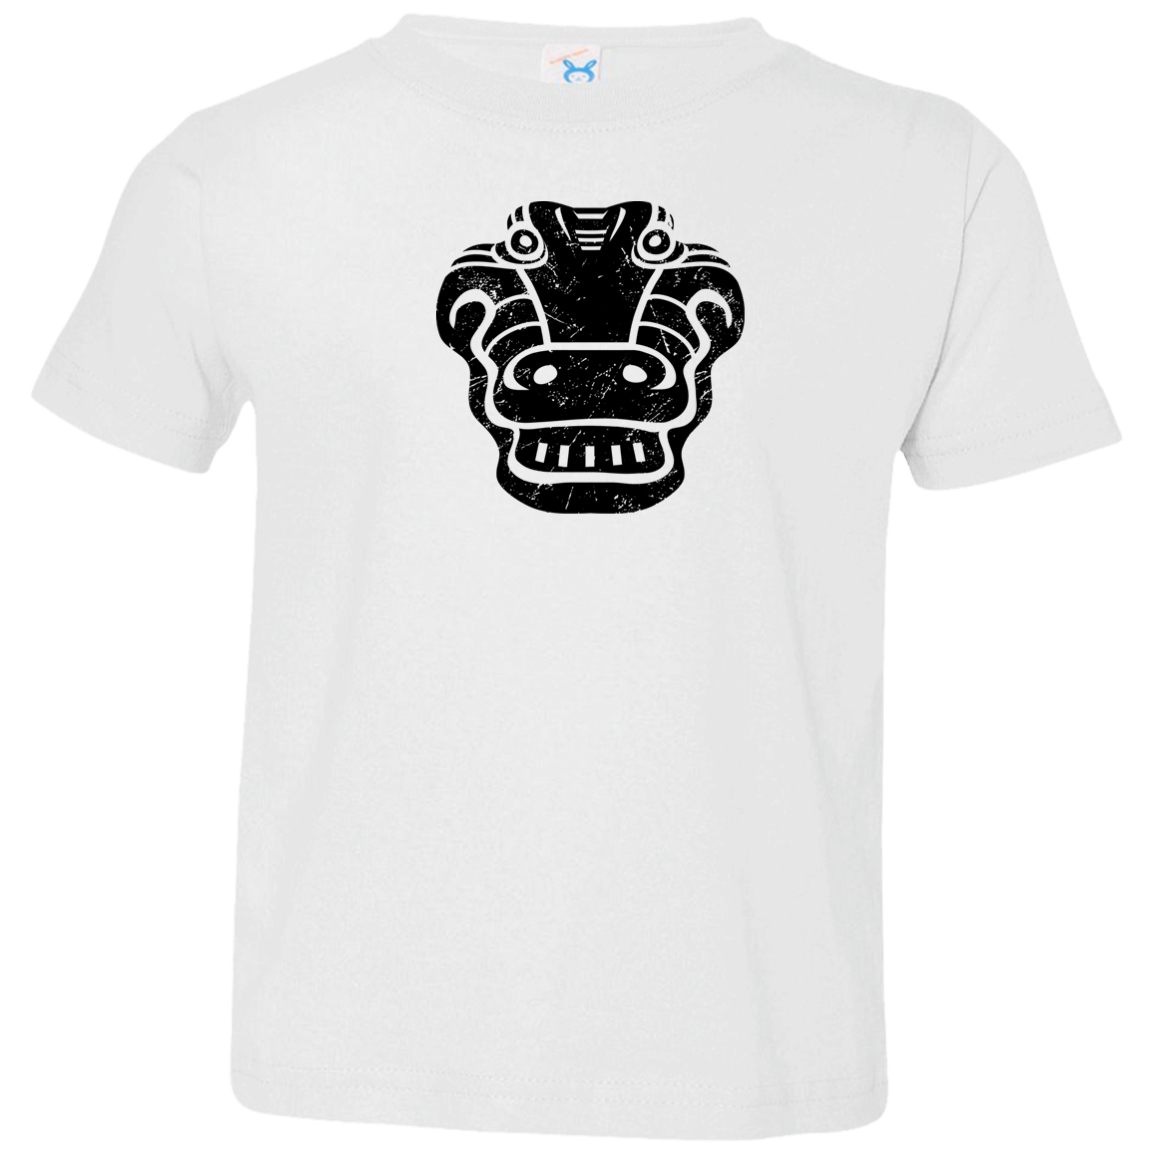 Black Distressed Emblem T-Shirts for Toddlers (Alligator/Croc) - Dark Corps